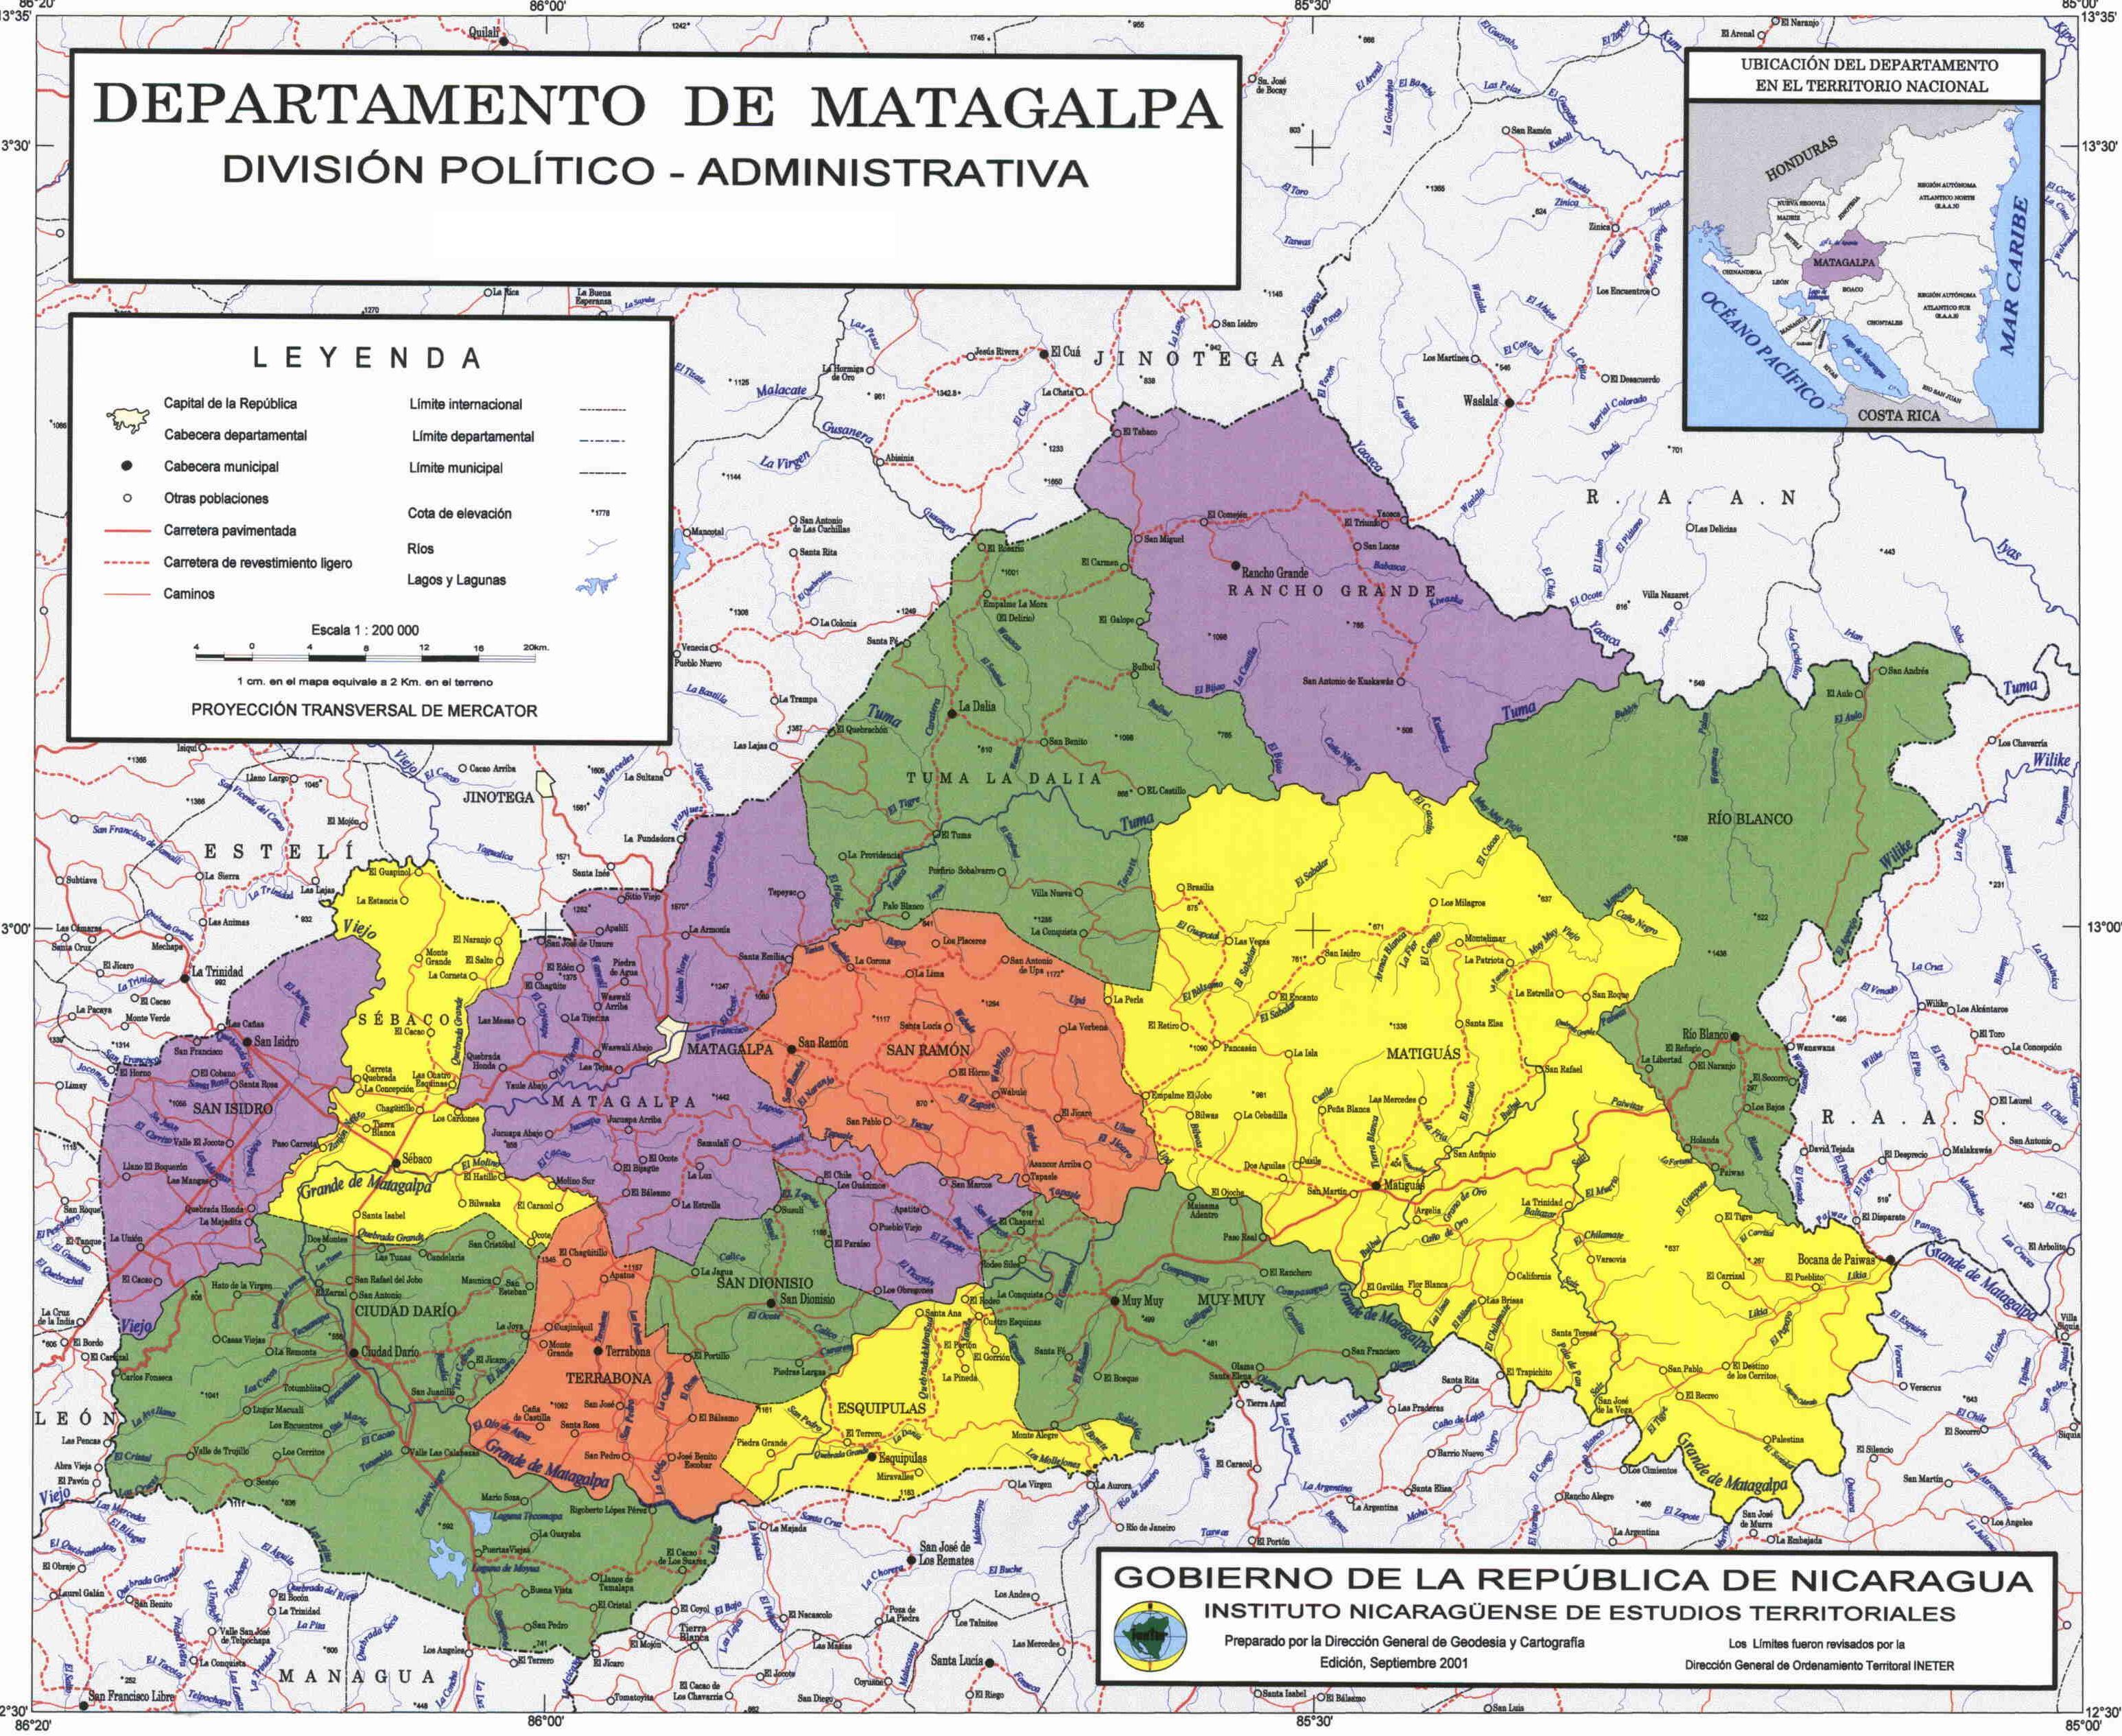 Mapa de Matagalpa, División Político-Administrativa del Departamento, Nicaragua